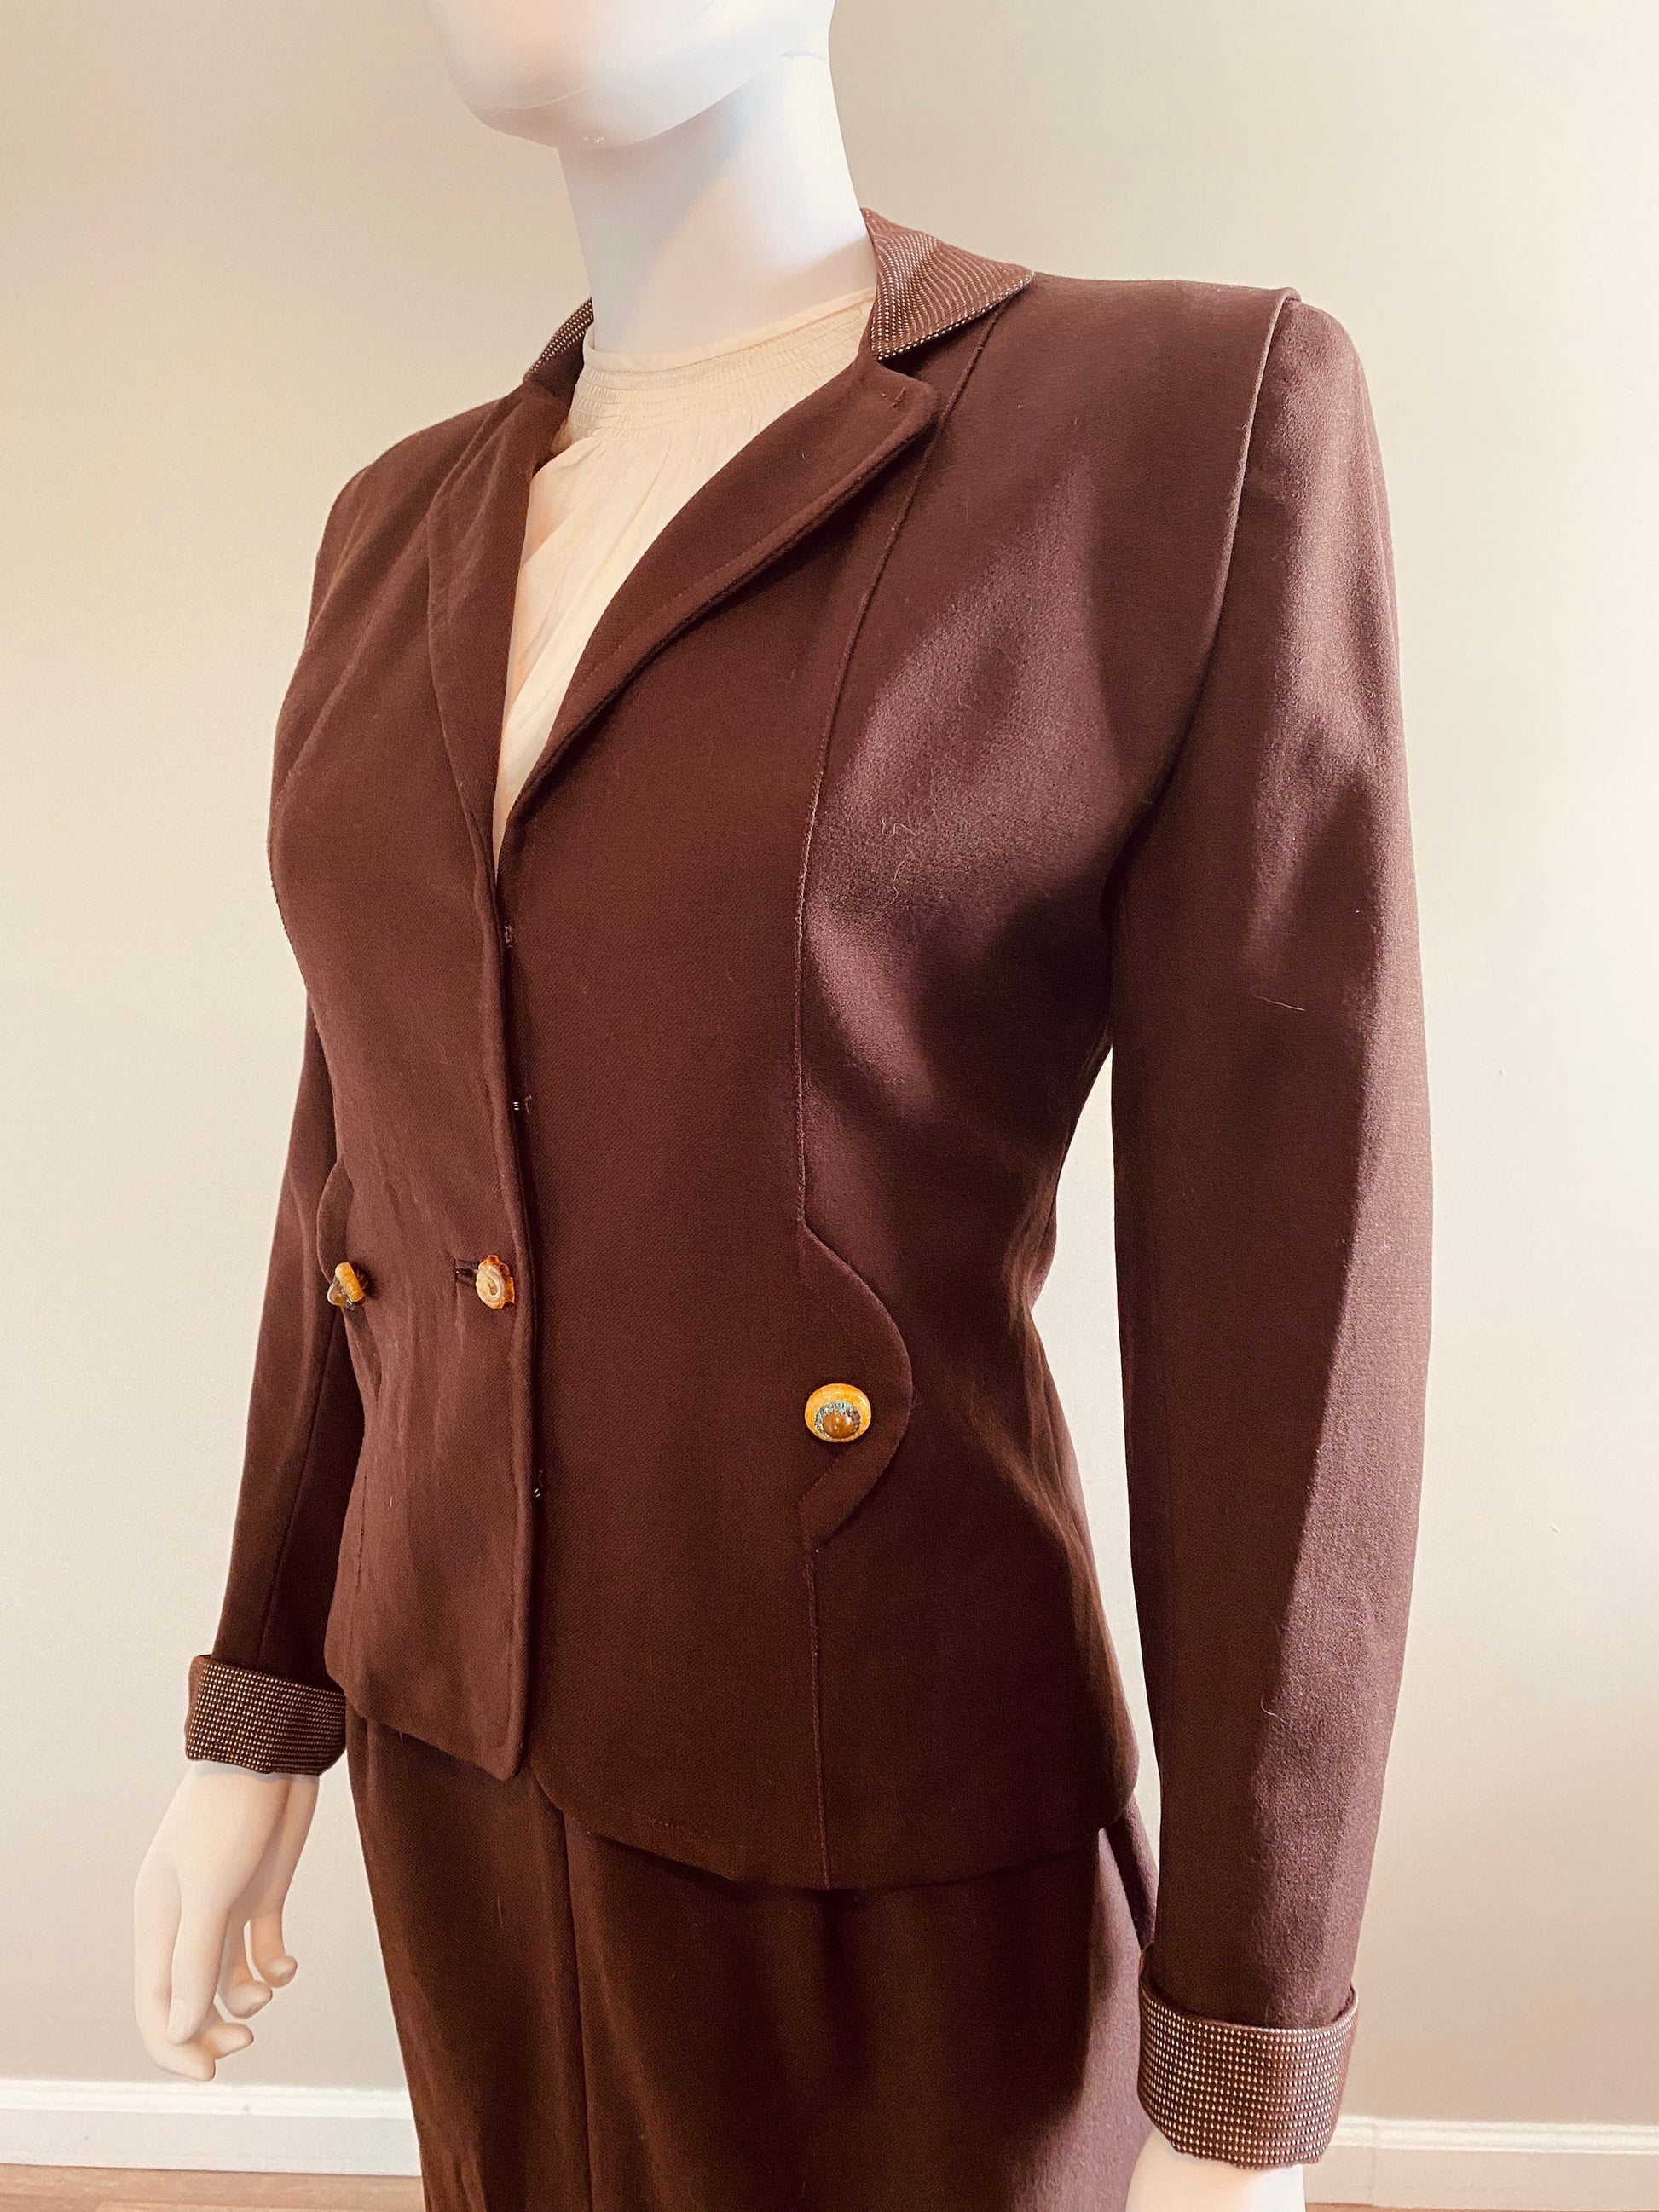 Vintage Late 1930s Brown Wool Gaberdine Skirt Suit / 30s Suit / Size S